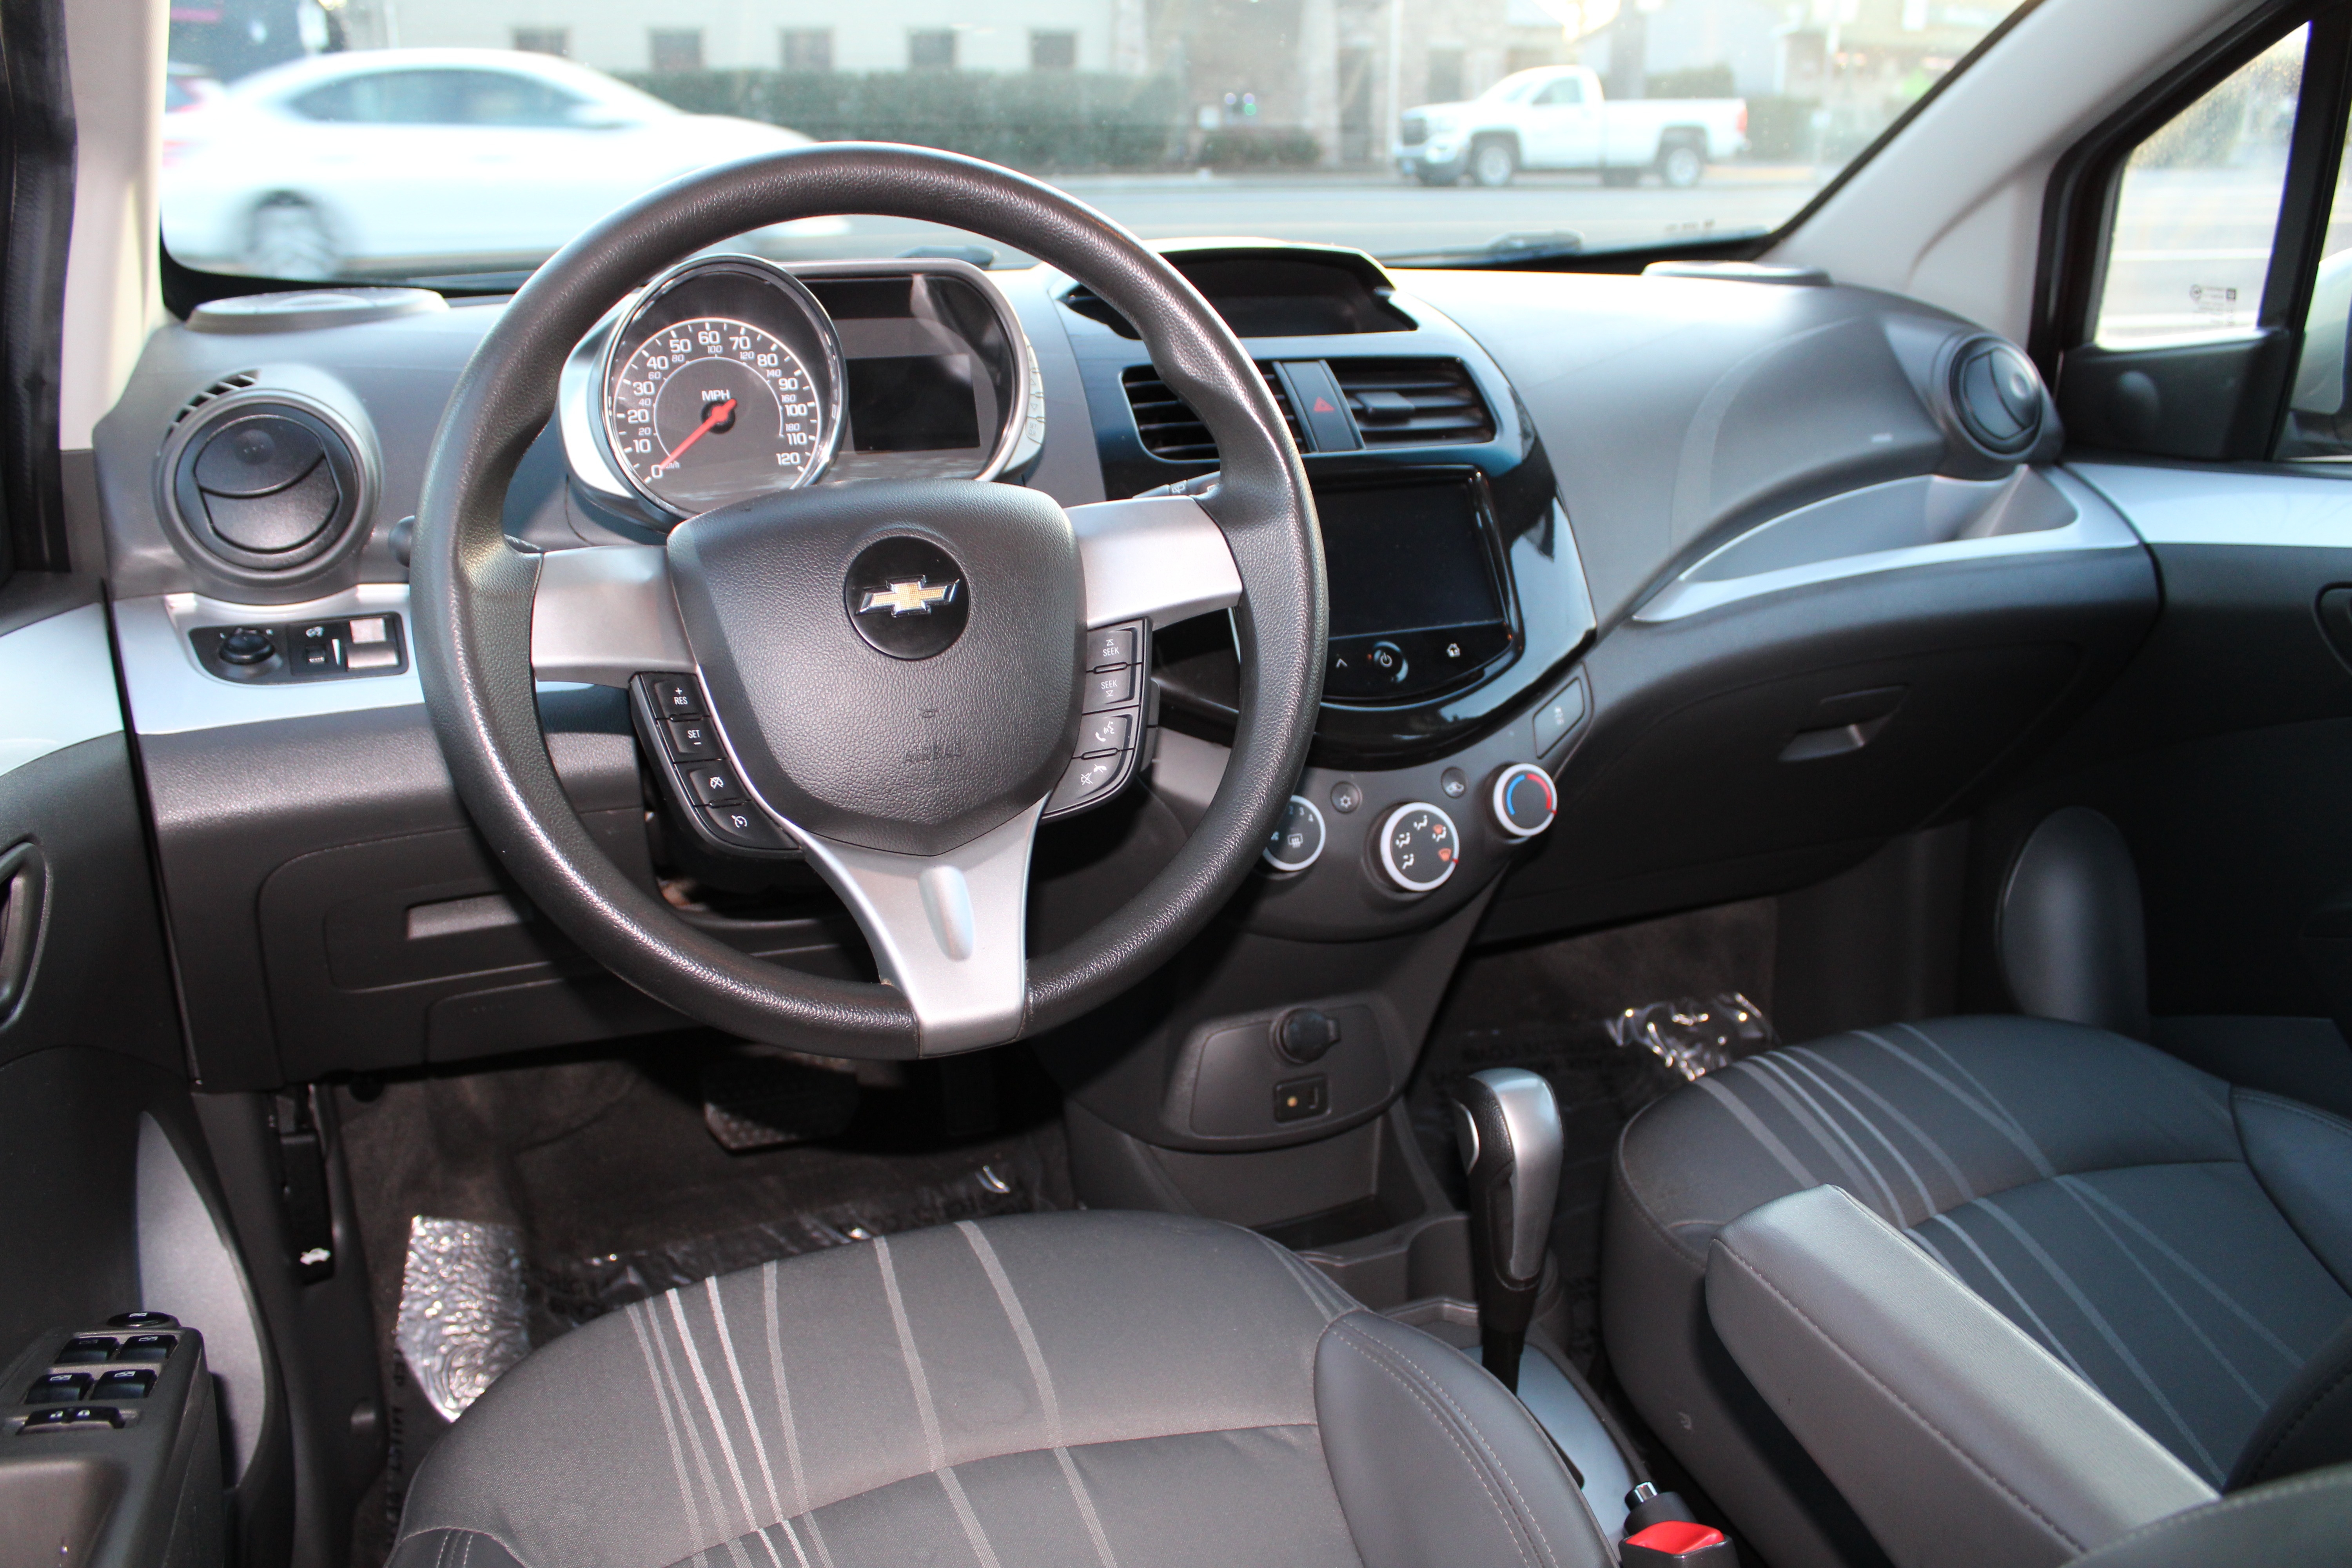 2014 Chevrolet Spark Leather Interior 5dr Hb Cvt Lt W 1lt